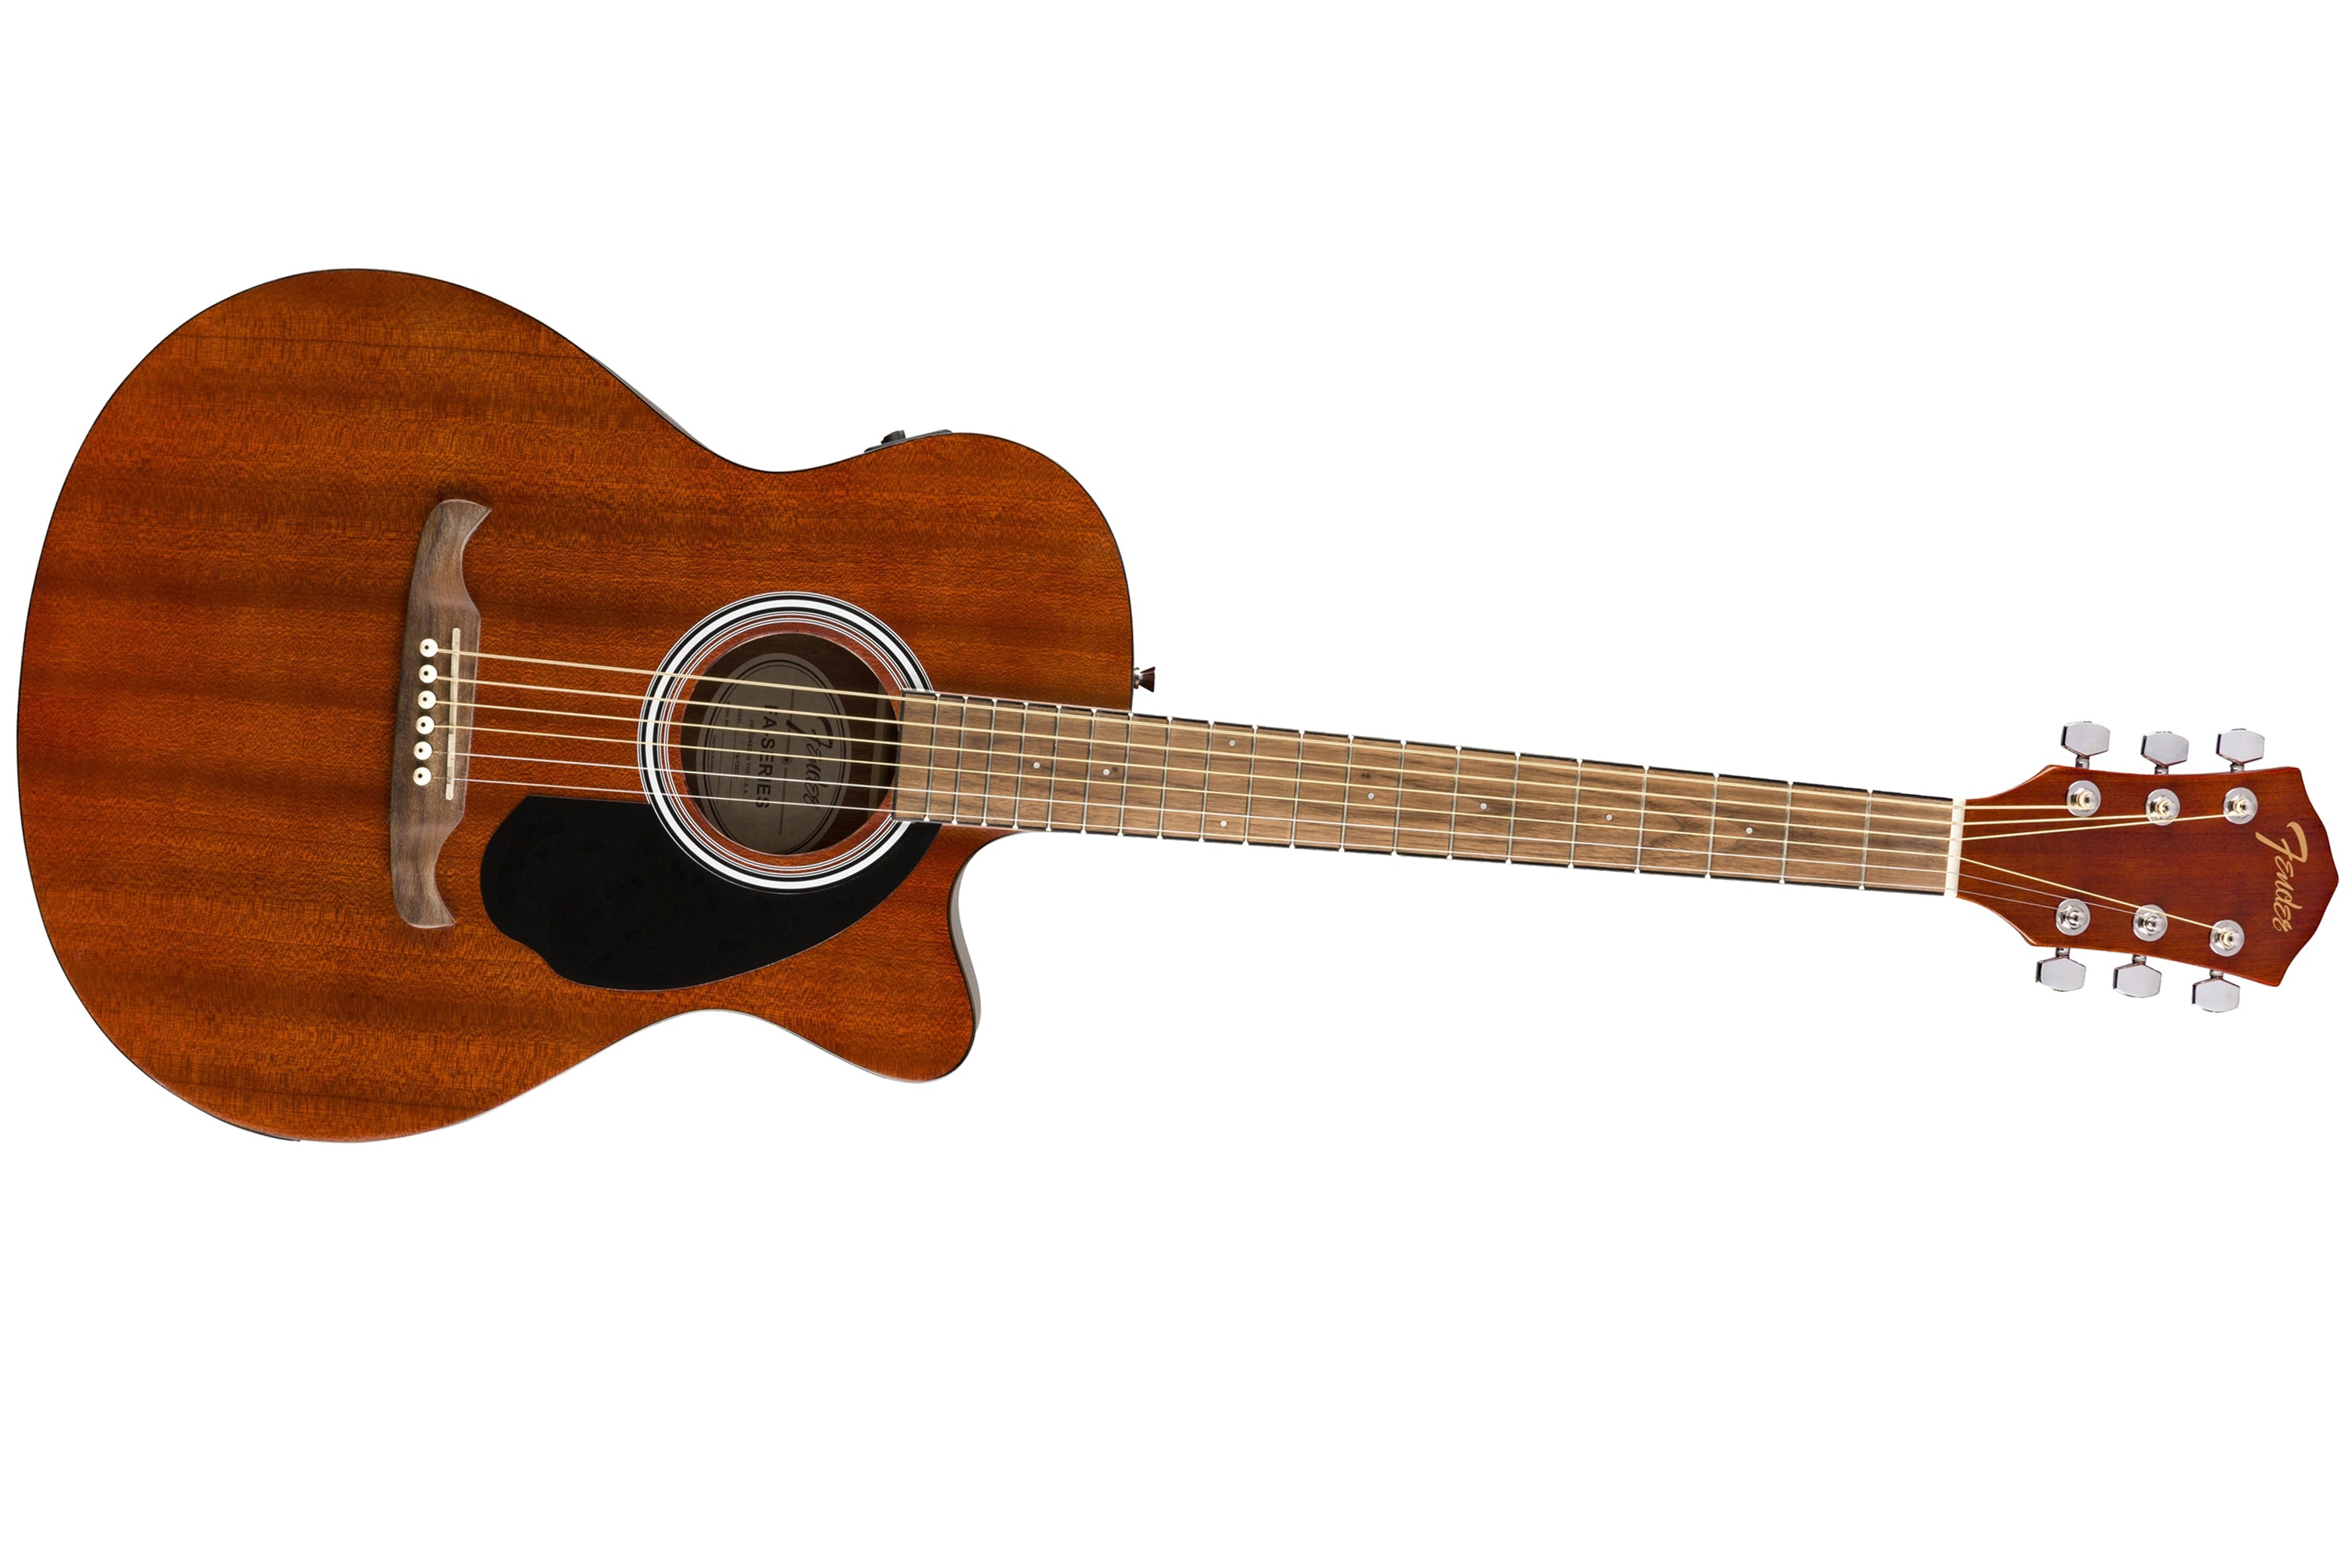 Fender 135CE Concert Acoustic Electric Guitar - Natural Mahogany